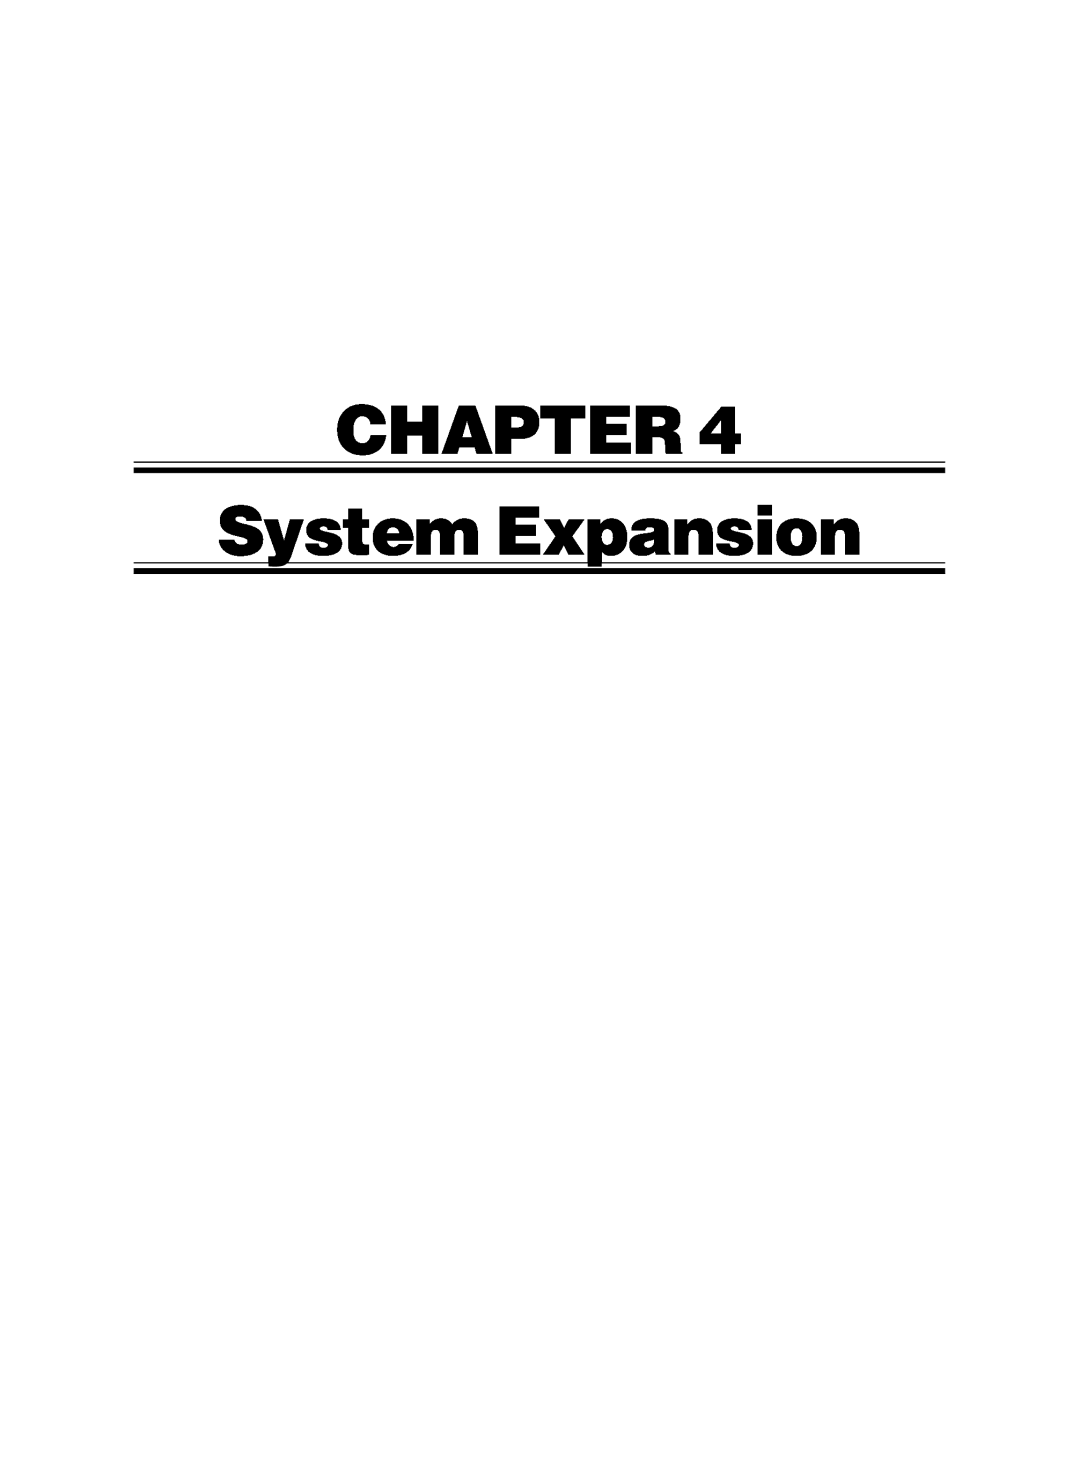 Fujitsu 5000 user manual System Expansion, Chapter 